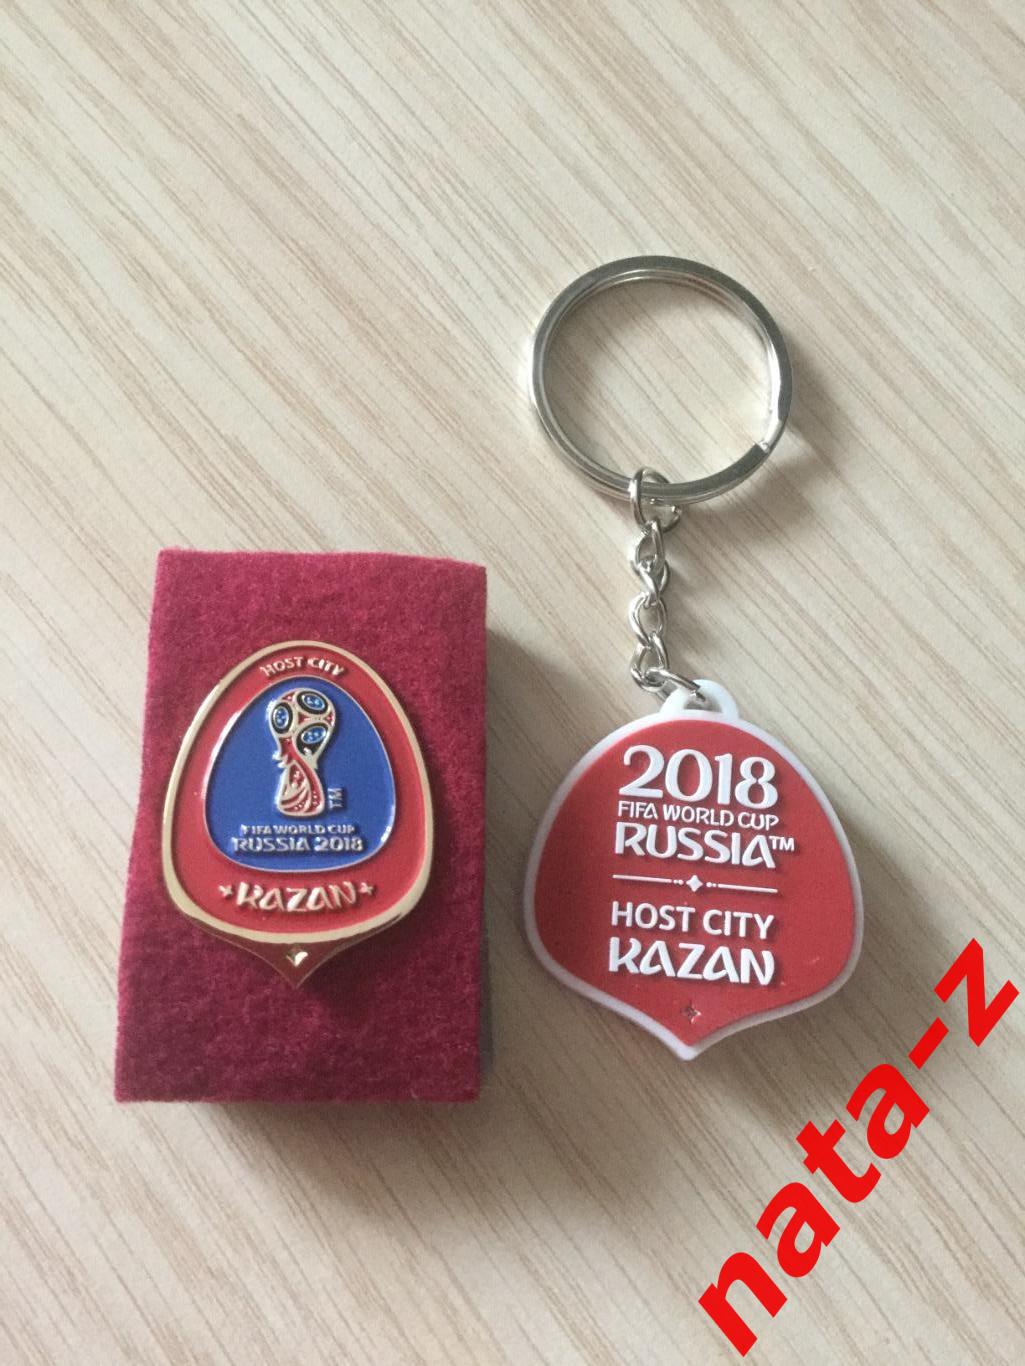 ЧМ 2018 Значок + брелок город Казань